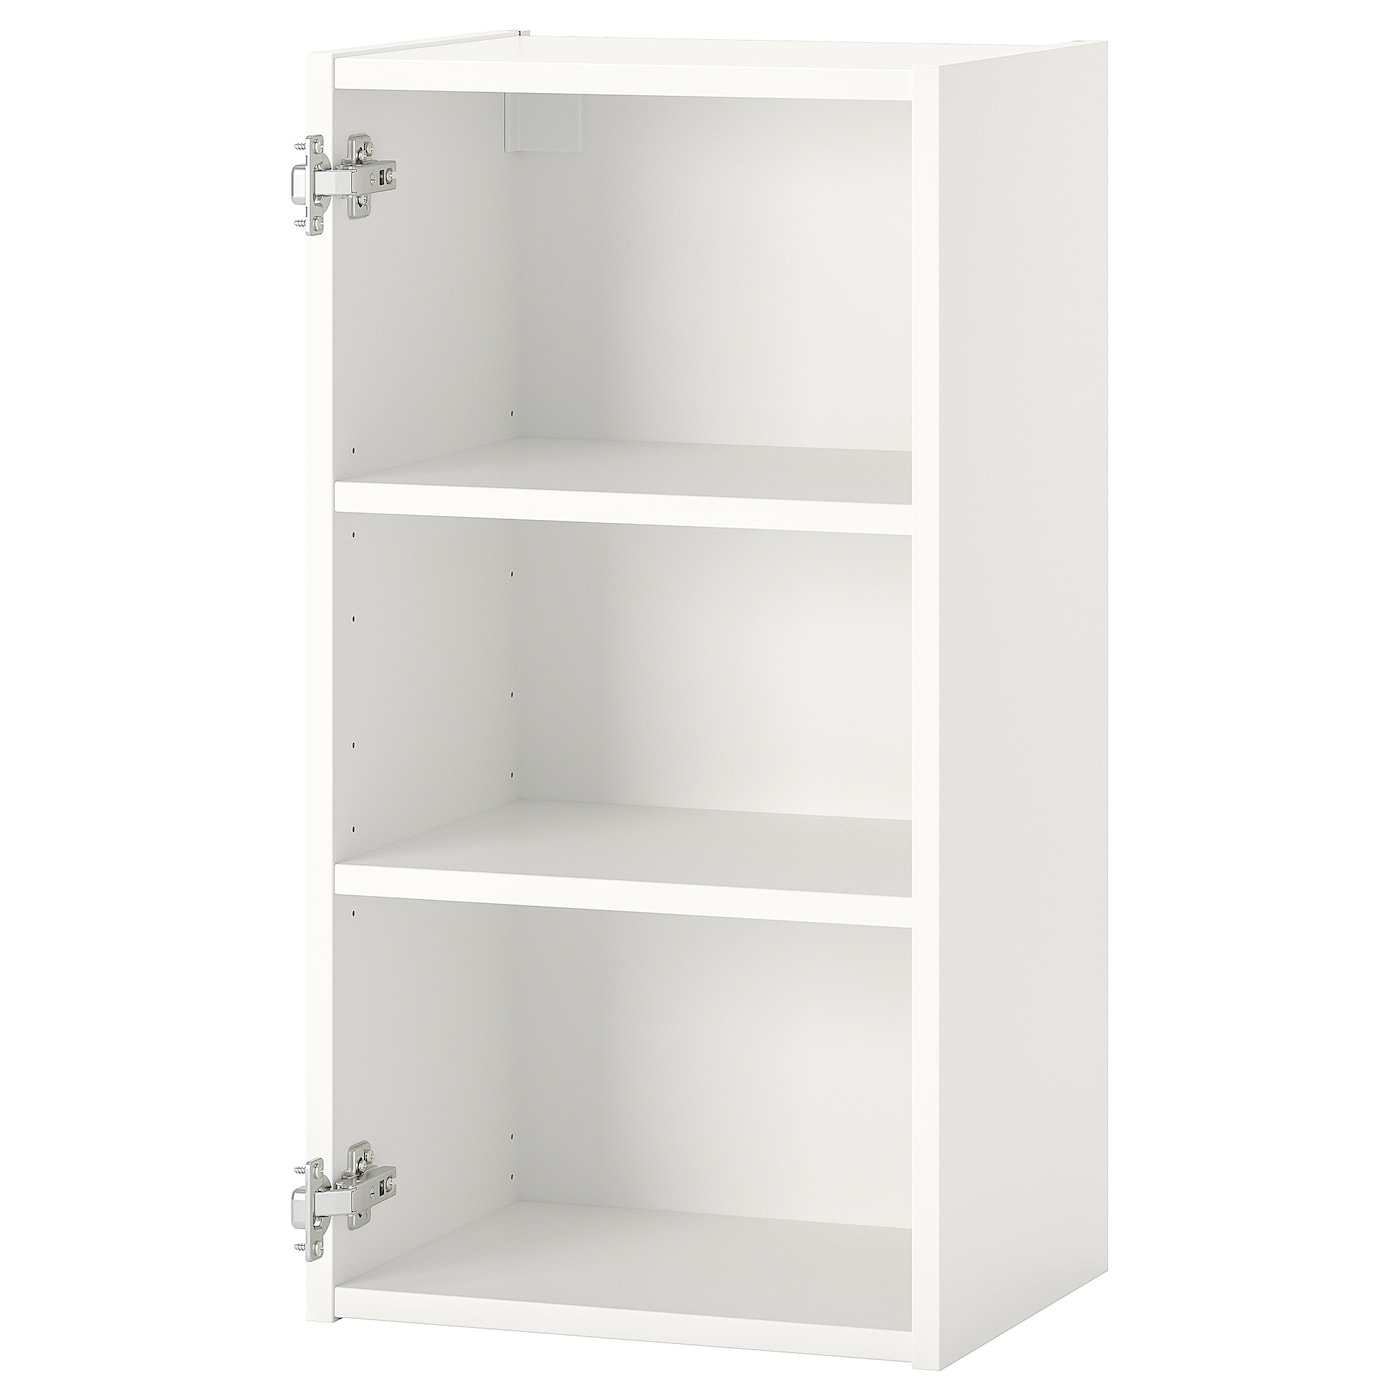 Каркас кухонного навесного шкафа - IKEA METOD/МЕТОД ИКЕА,  40х30х75 см, белый